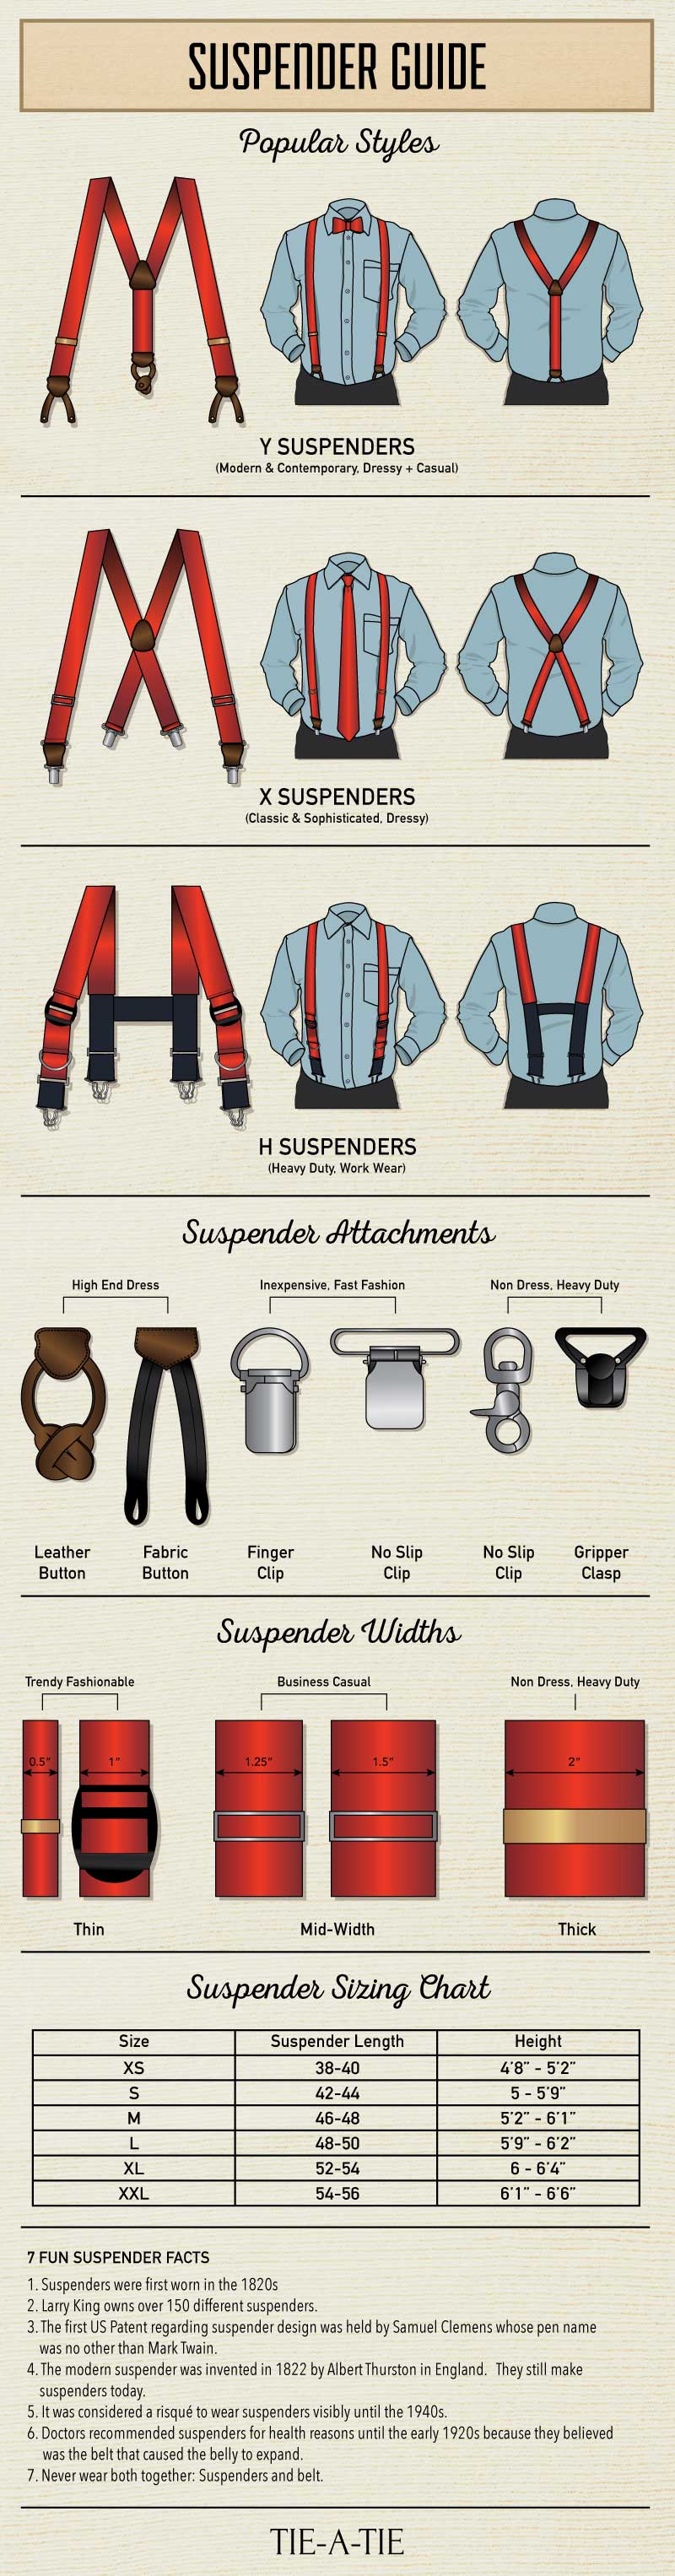 suspender-guide-how-to-wear-suspenders-tie-a-tie